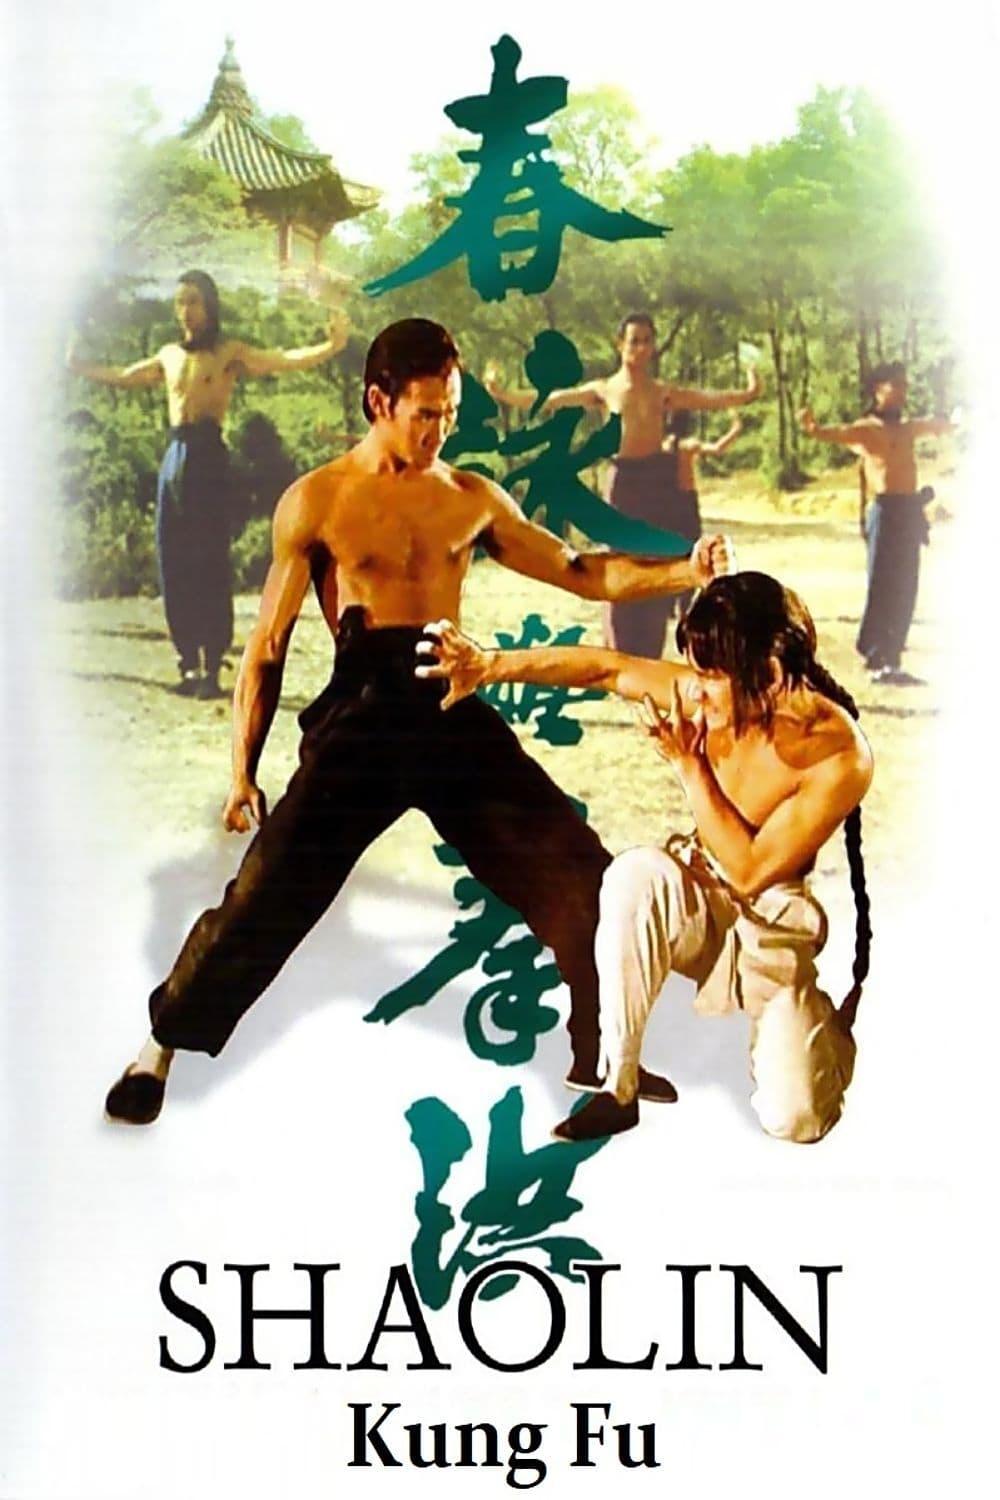 Shaolin Kung Fu poster